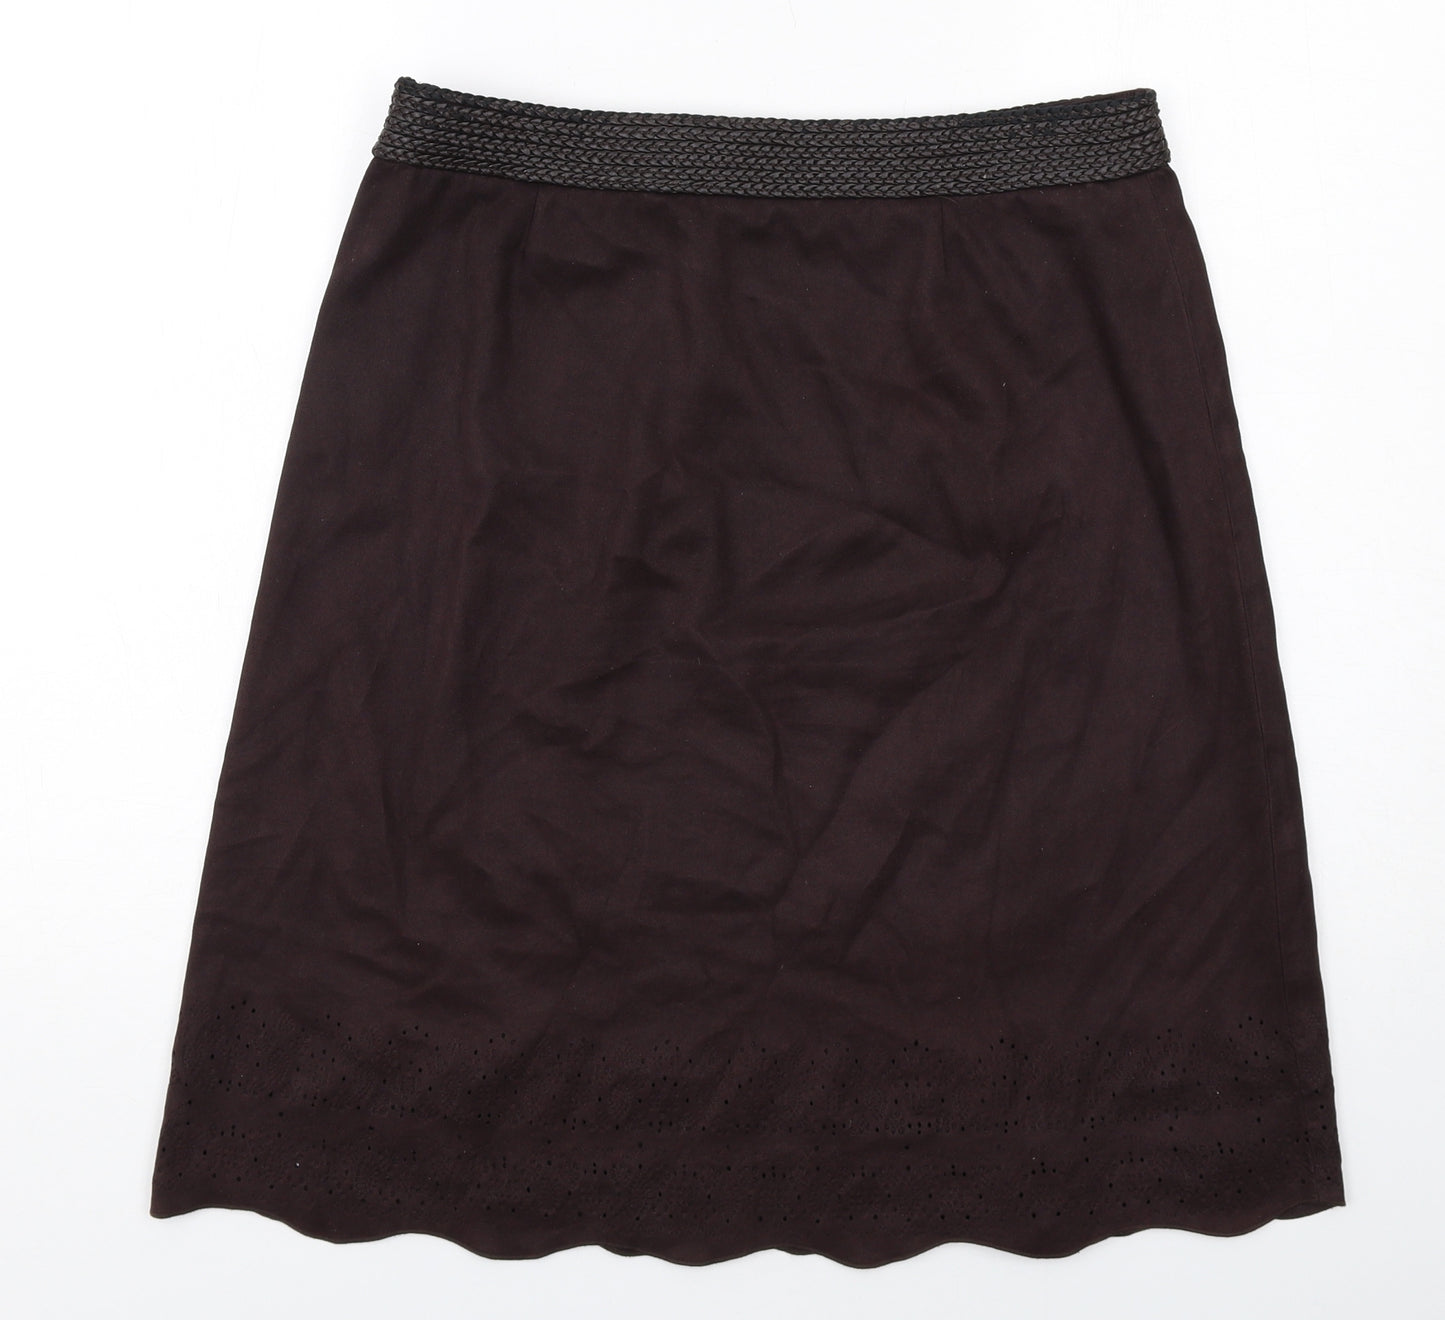 NEXT Womens Brown Polyester A-Line Skirt Size 14 Zip